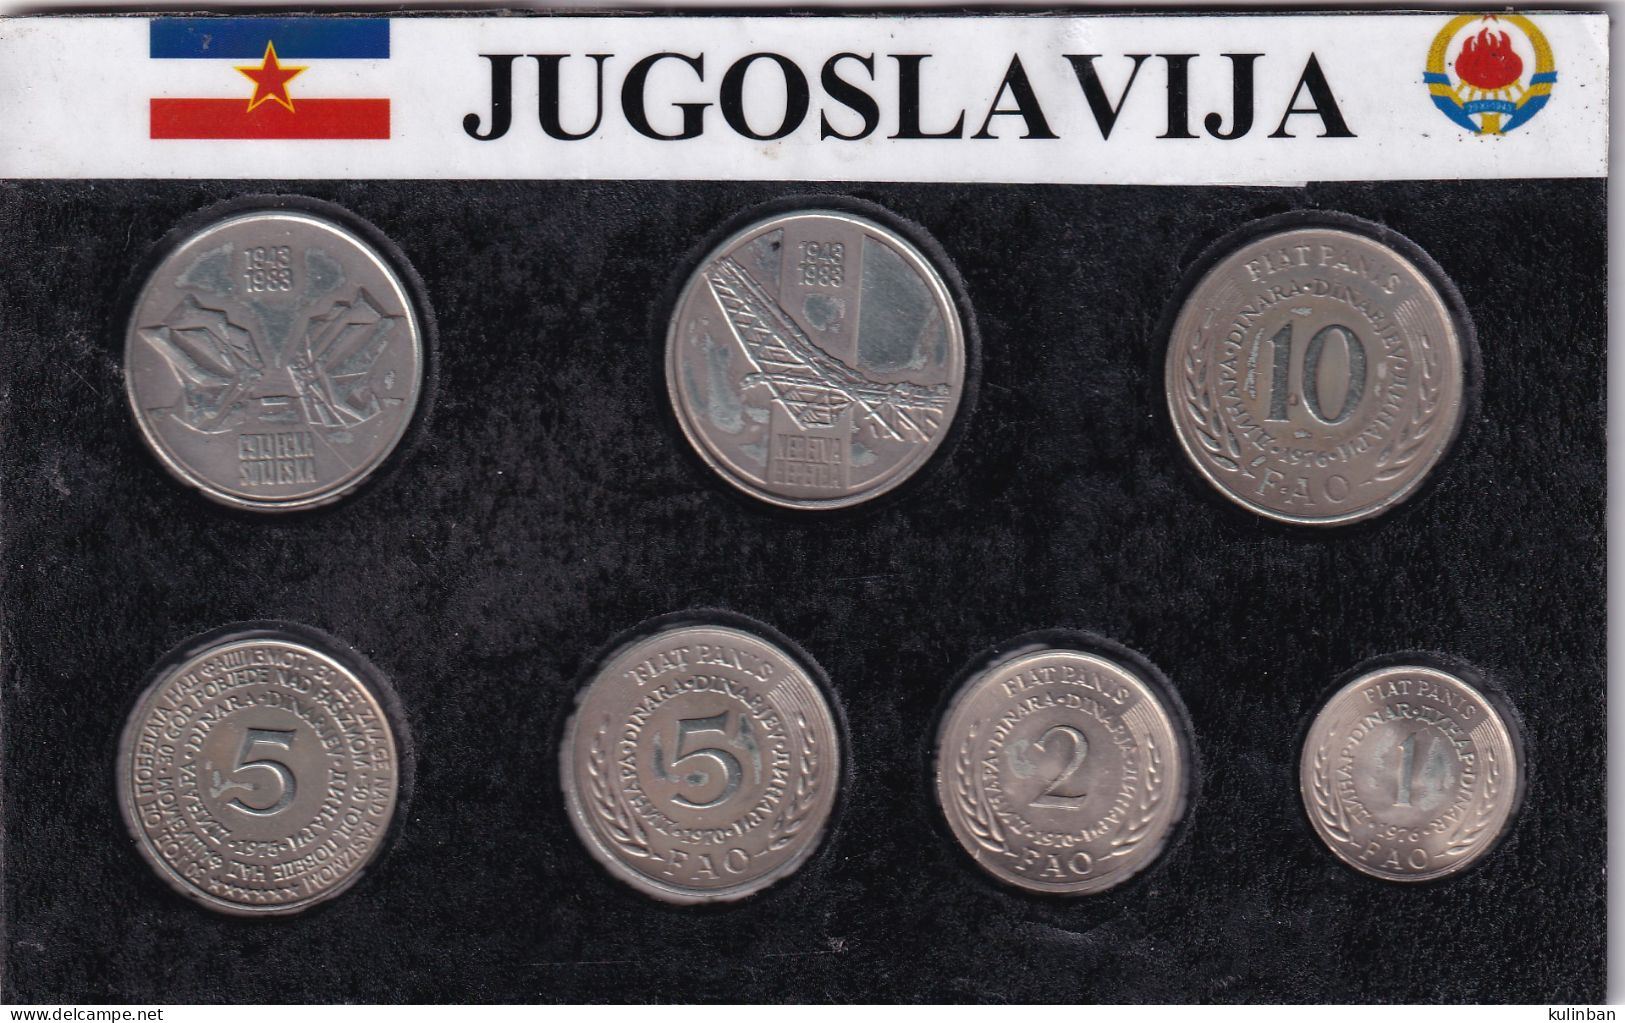 YUGOSLAVIA, Jubilee Coin Set - Yugoslavia